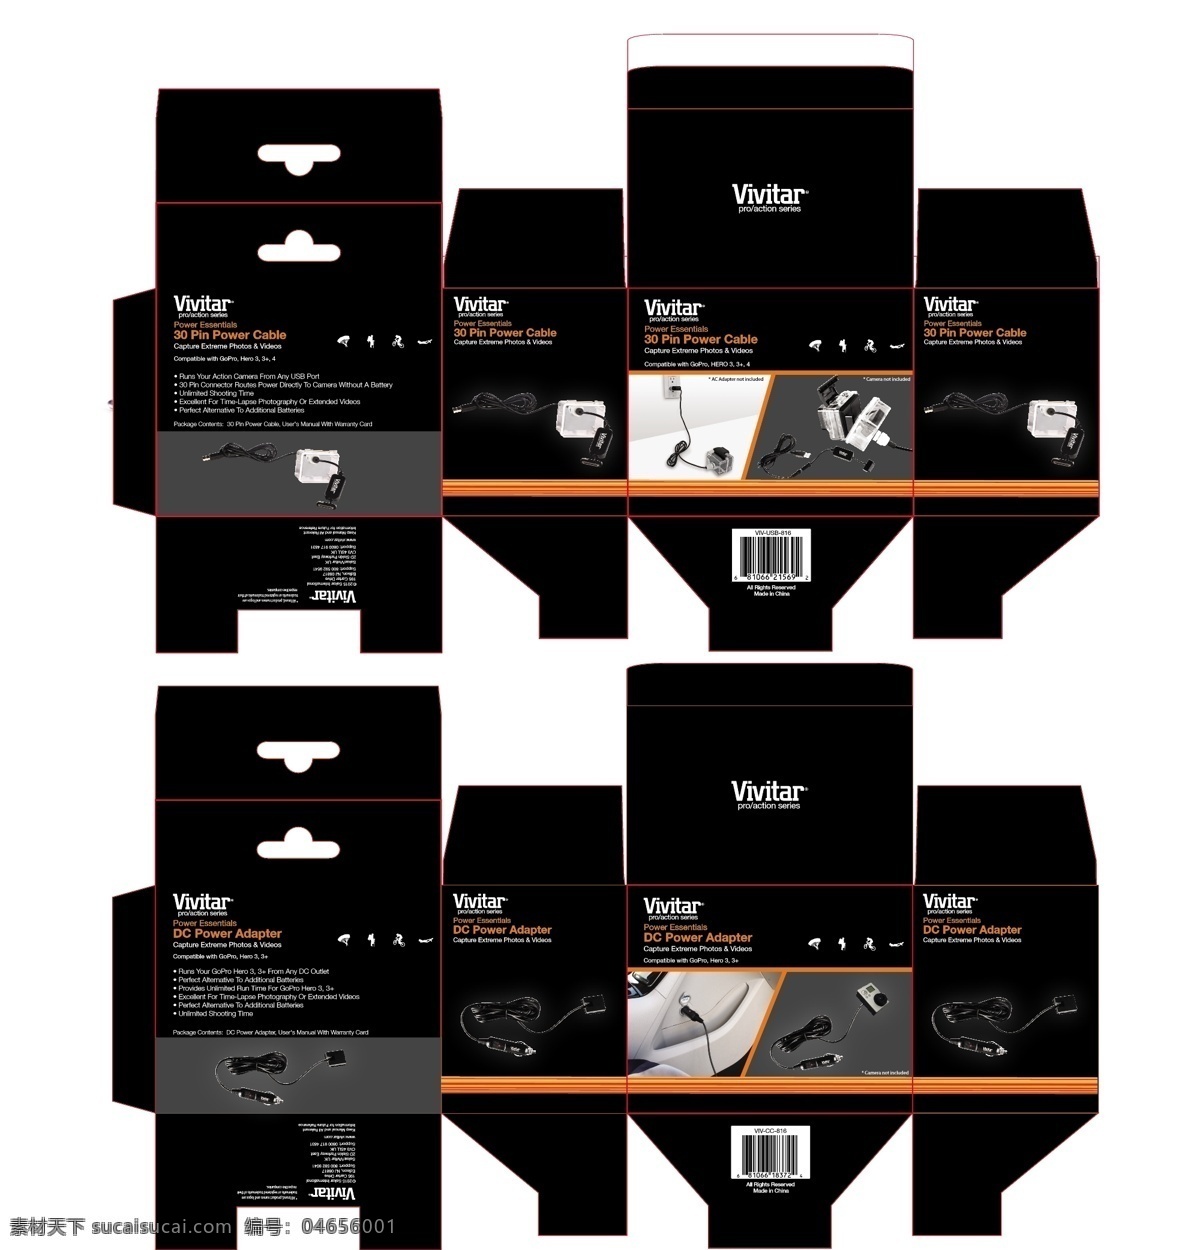 gopro 相机 配件 彩盒包装 包装 刀模图 车充彩盒 防水框彩盒 相机配件彩盒 原创设计 原创包装设计